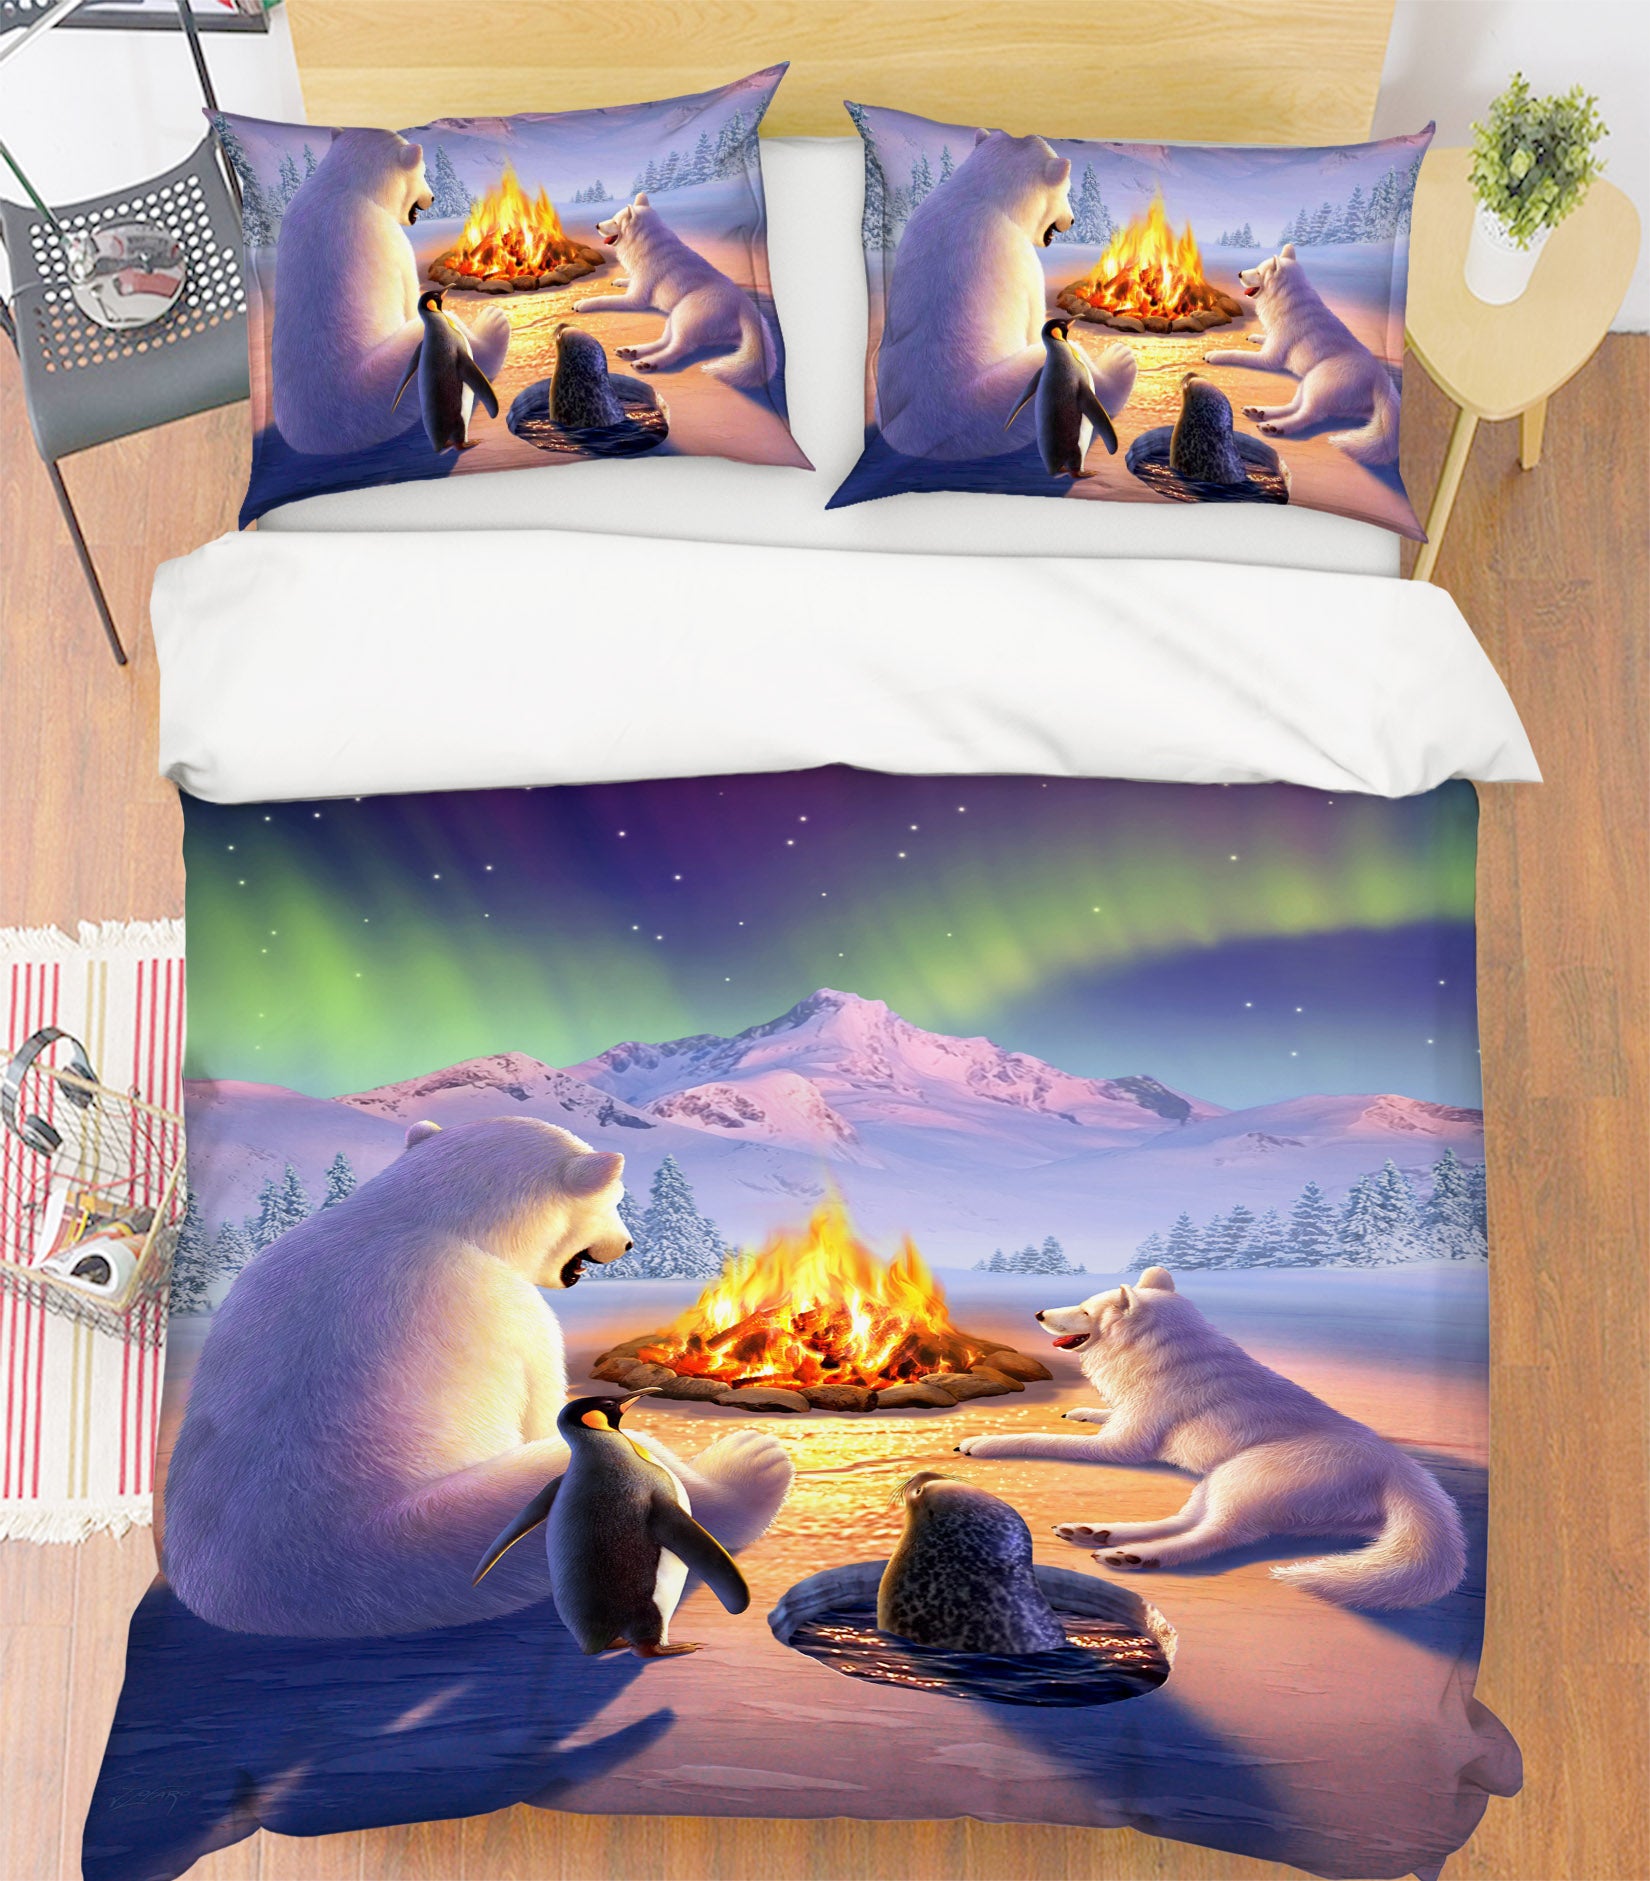 3D Polar Pals 86010 Jerry LoFaro bedding Bed Pillowcases Quilt